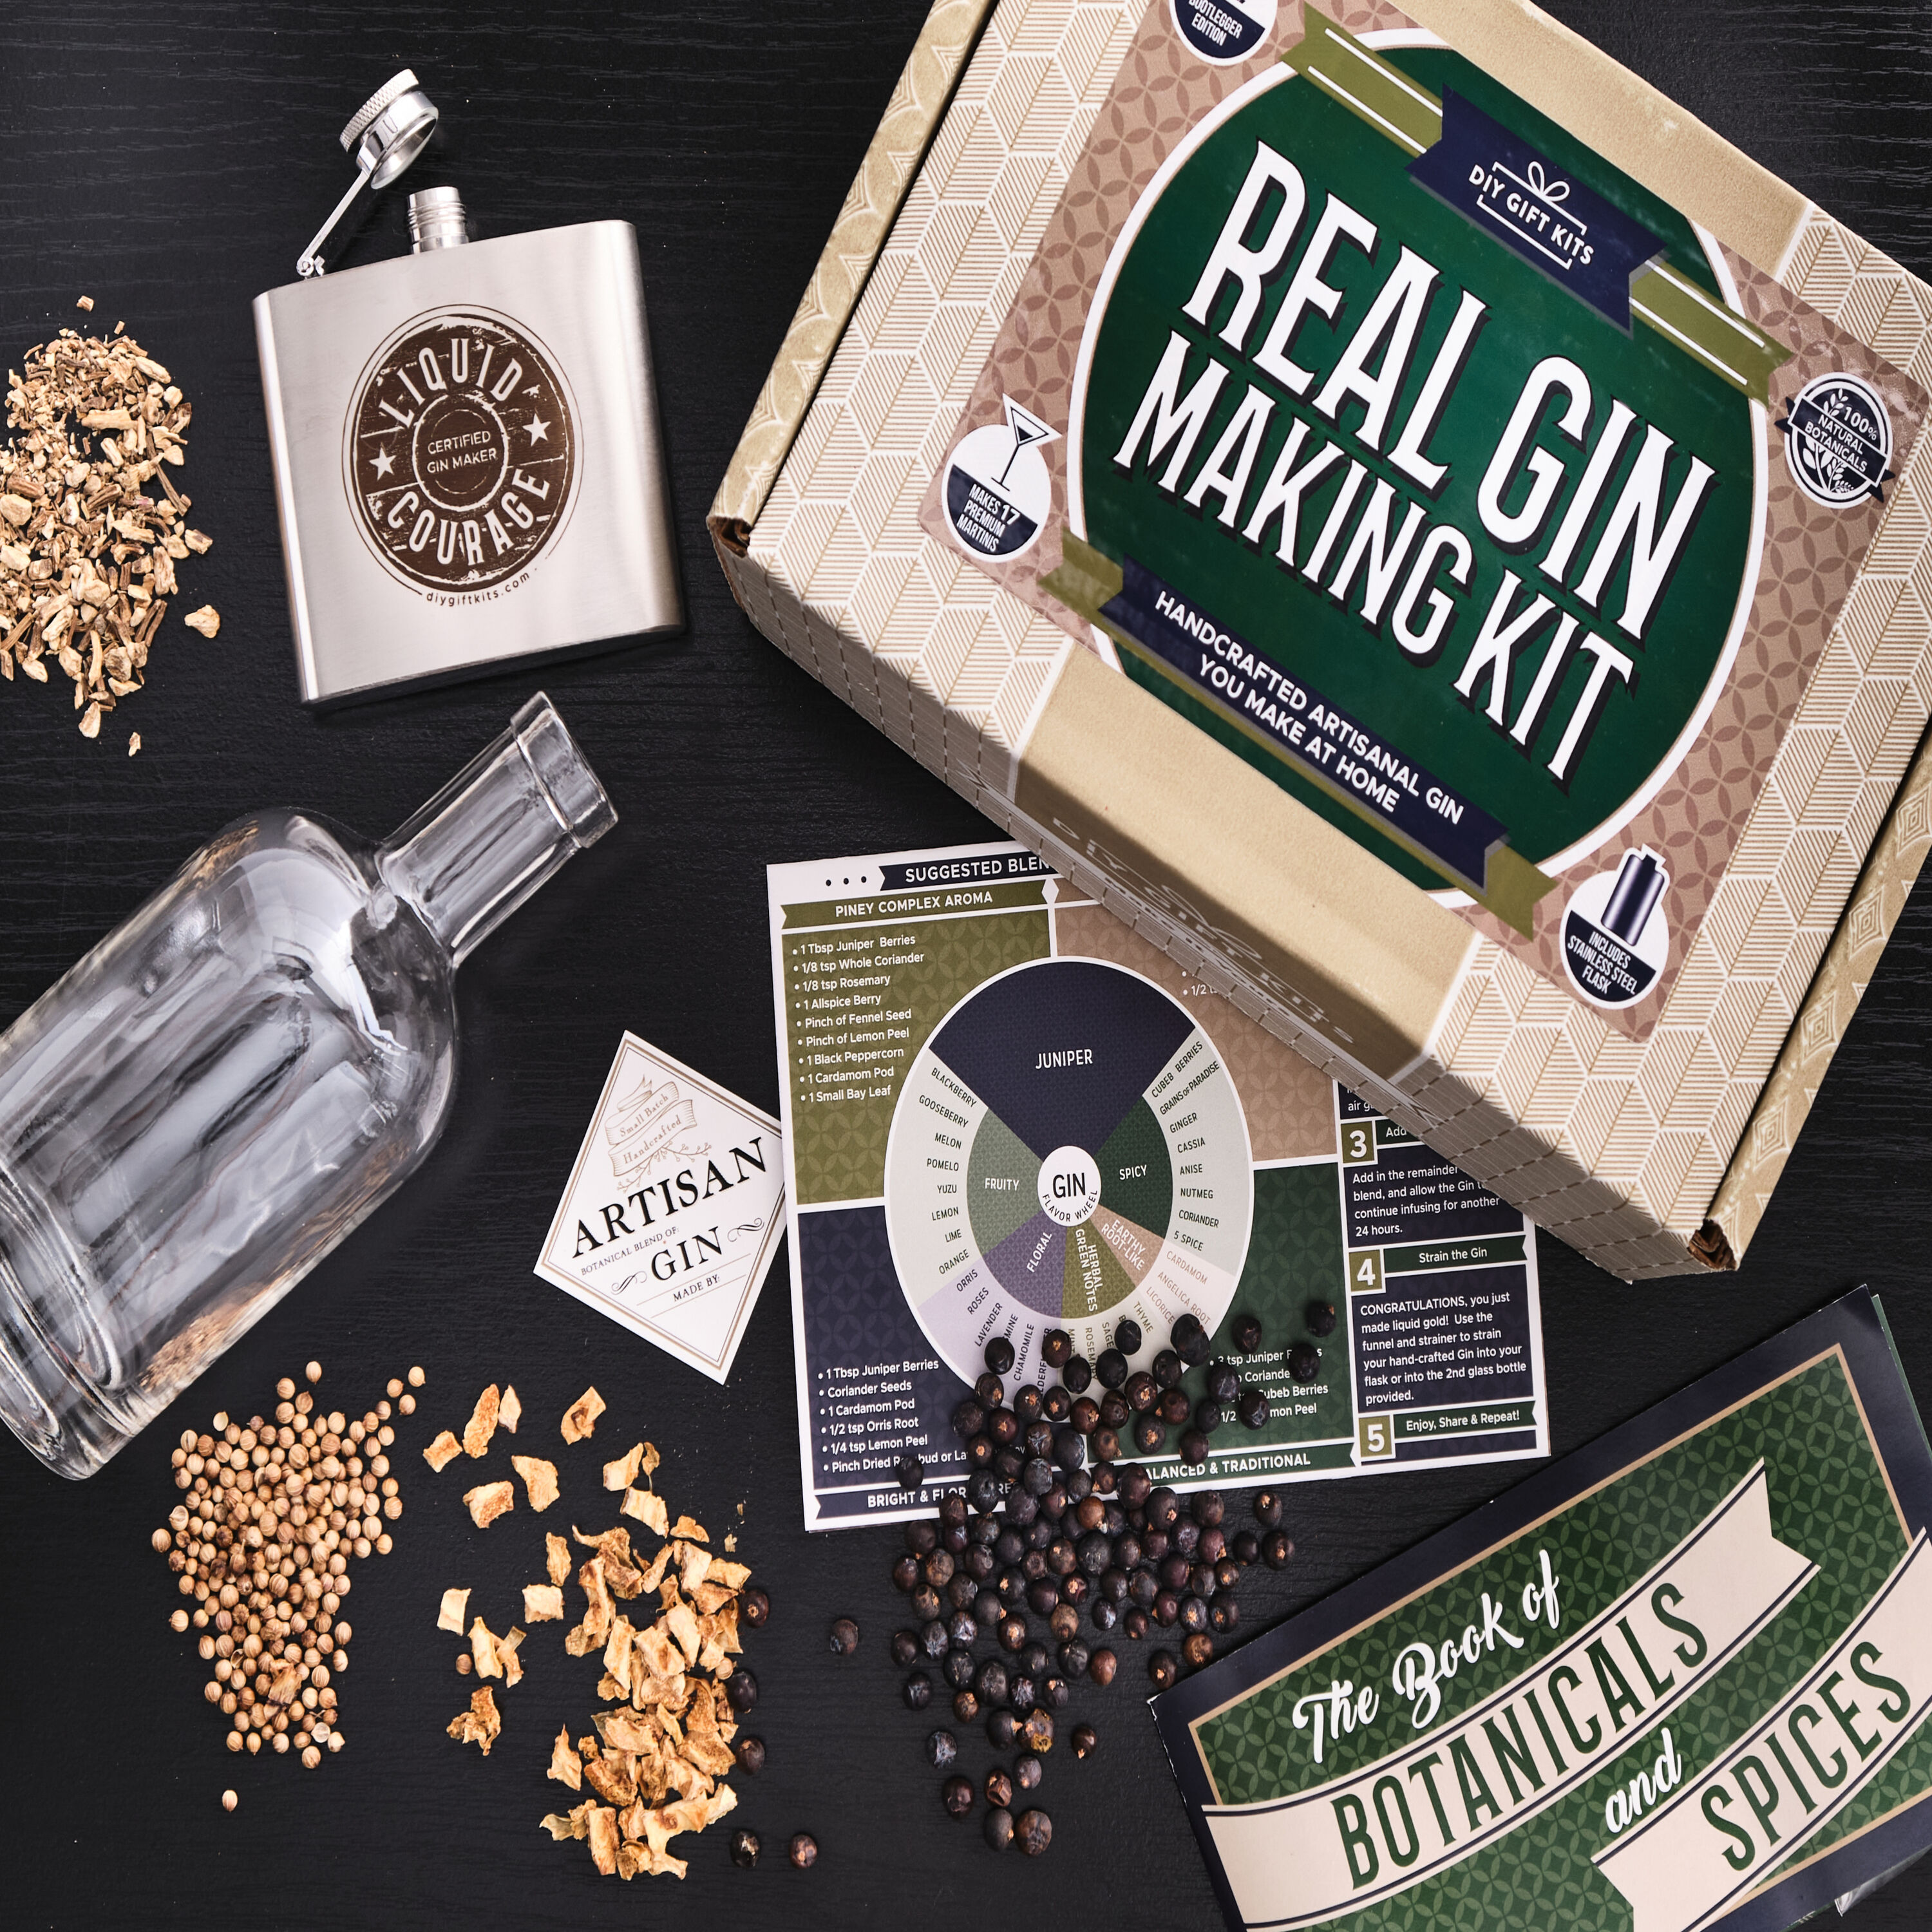 DO YOUR GIN! - DIY Craft Gin Kit – Buy Liquor Online